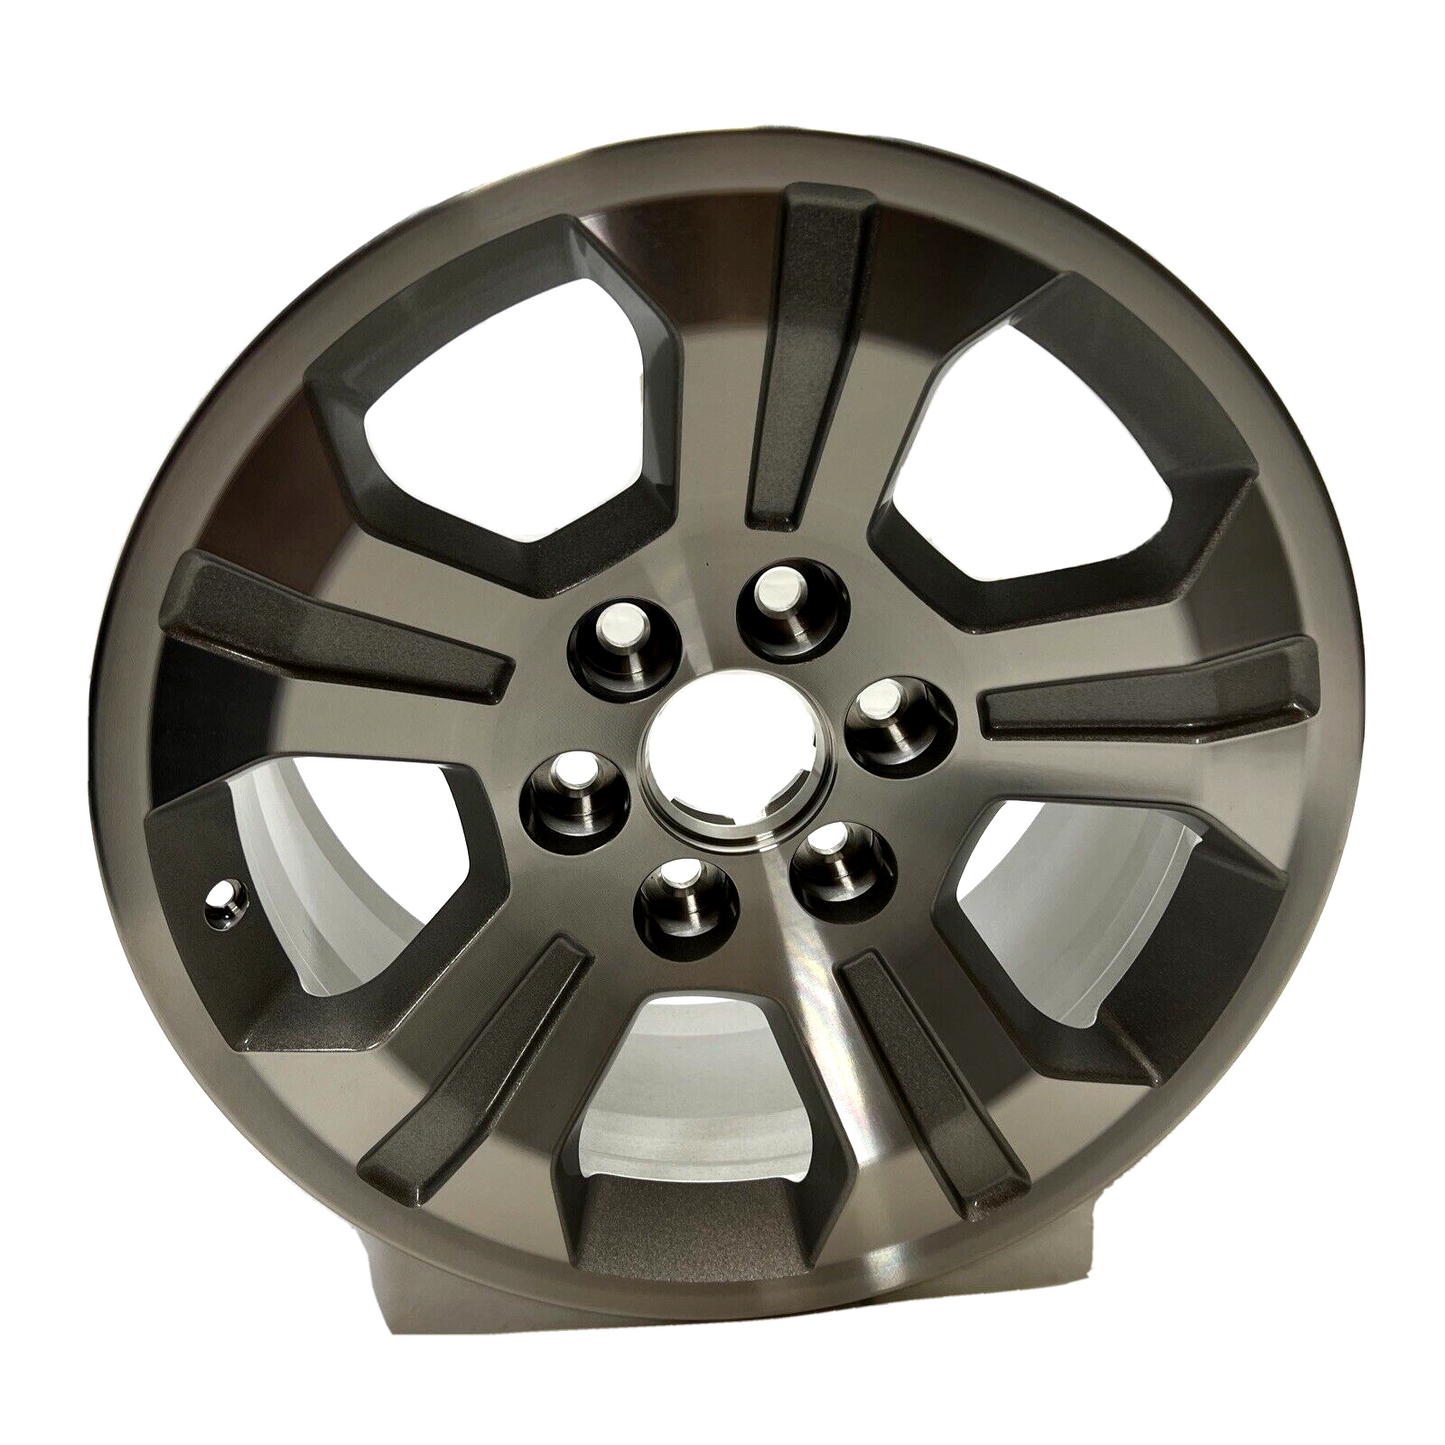 New OEM Genuine GM Chevrolet 2014-2019 18x8.5 Inch Aluminum Wheel 20937771